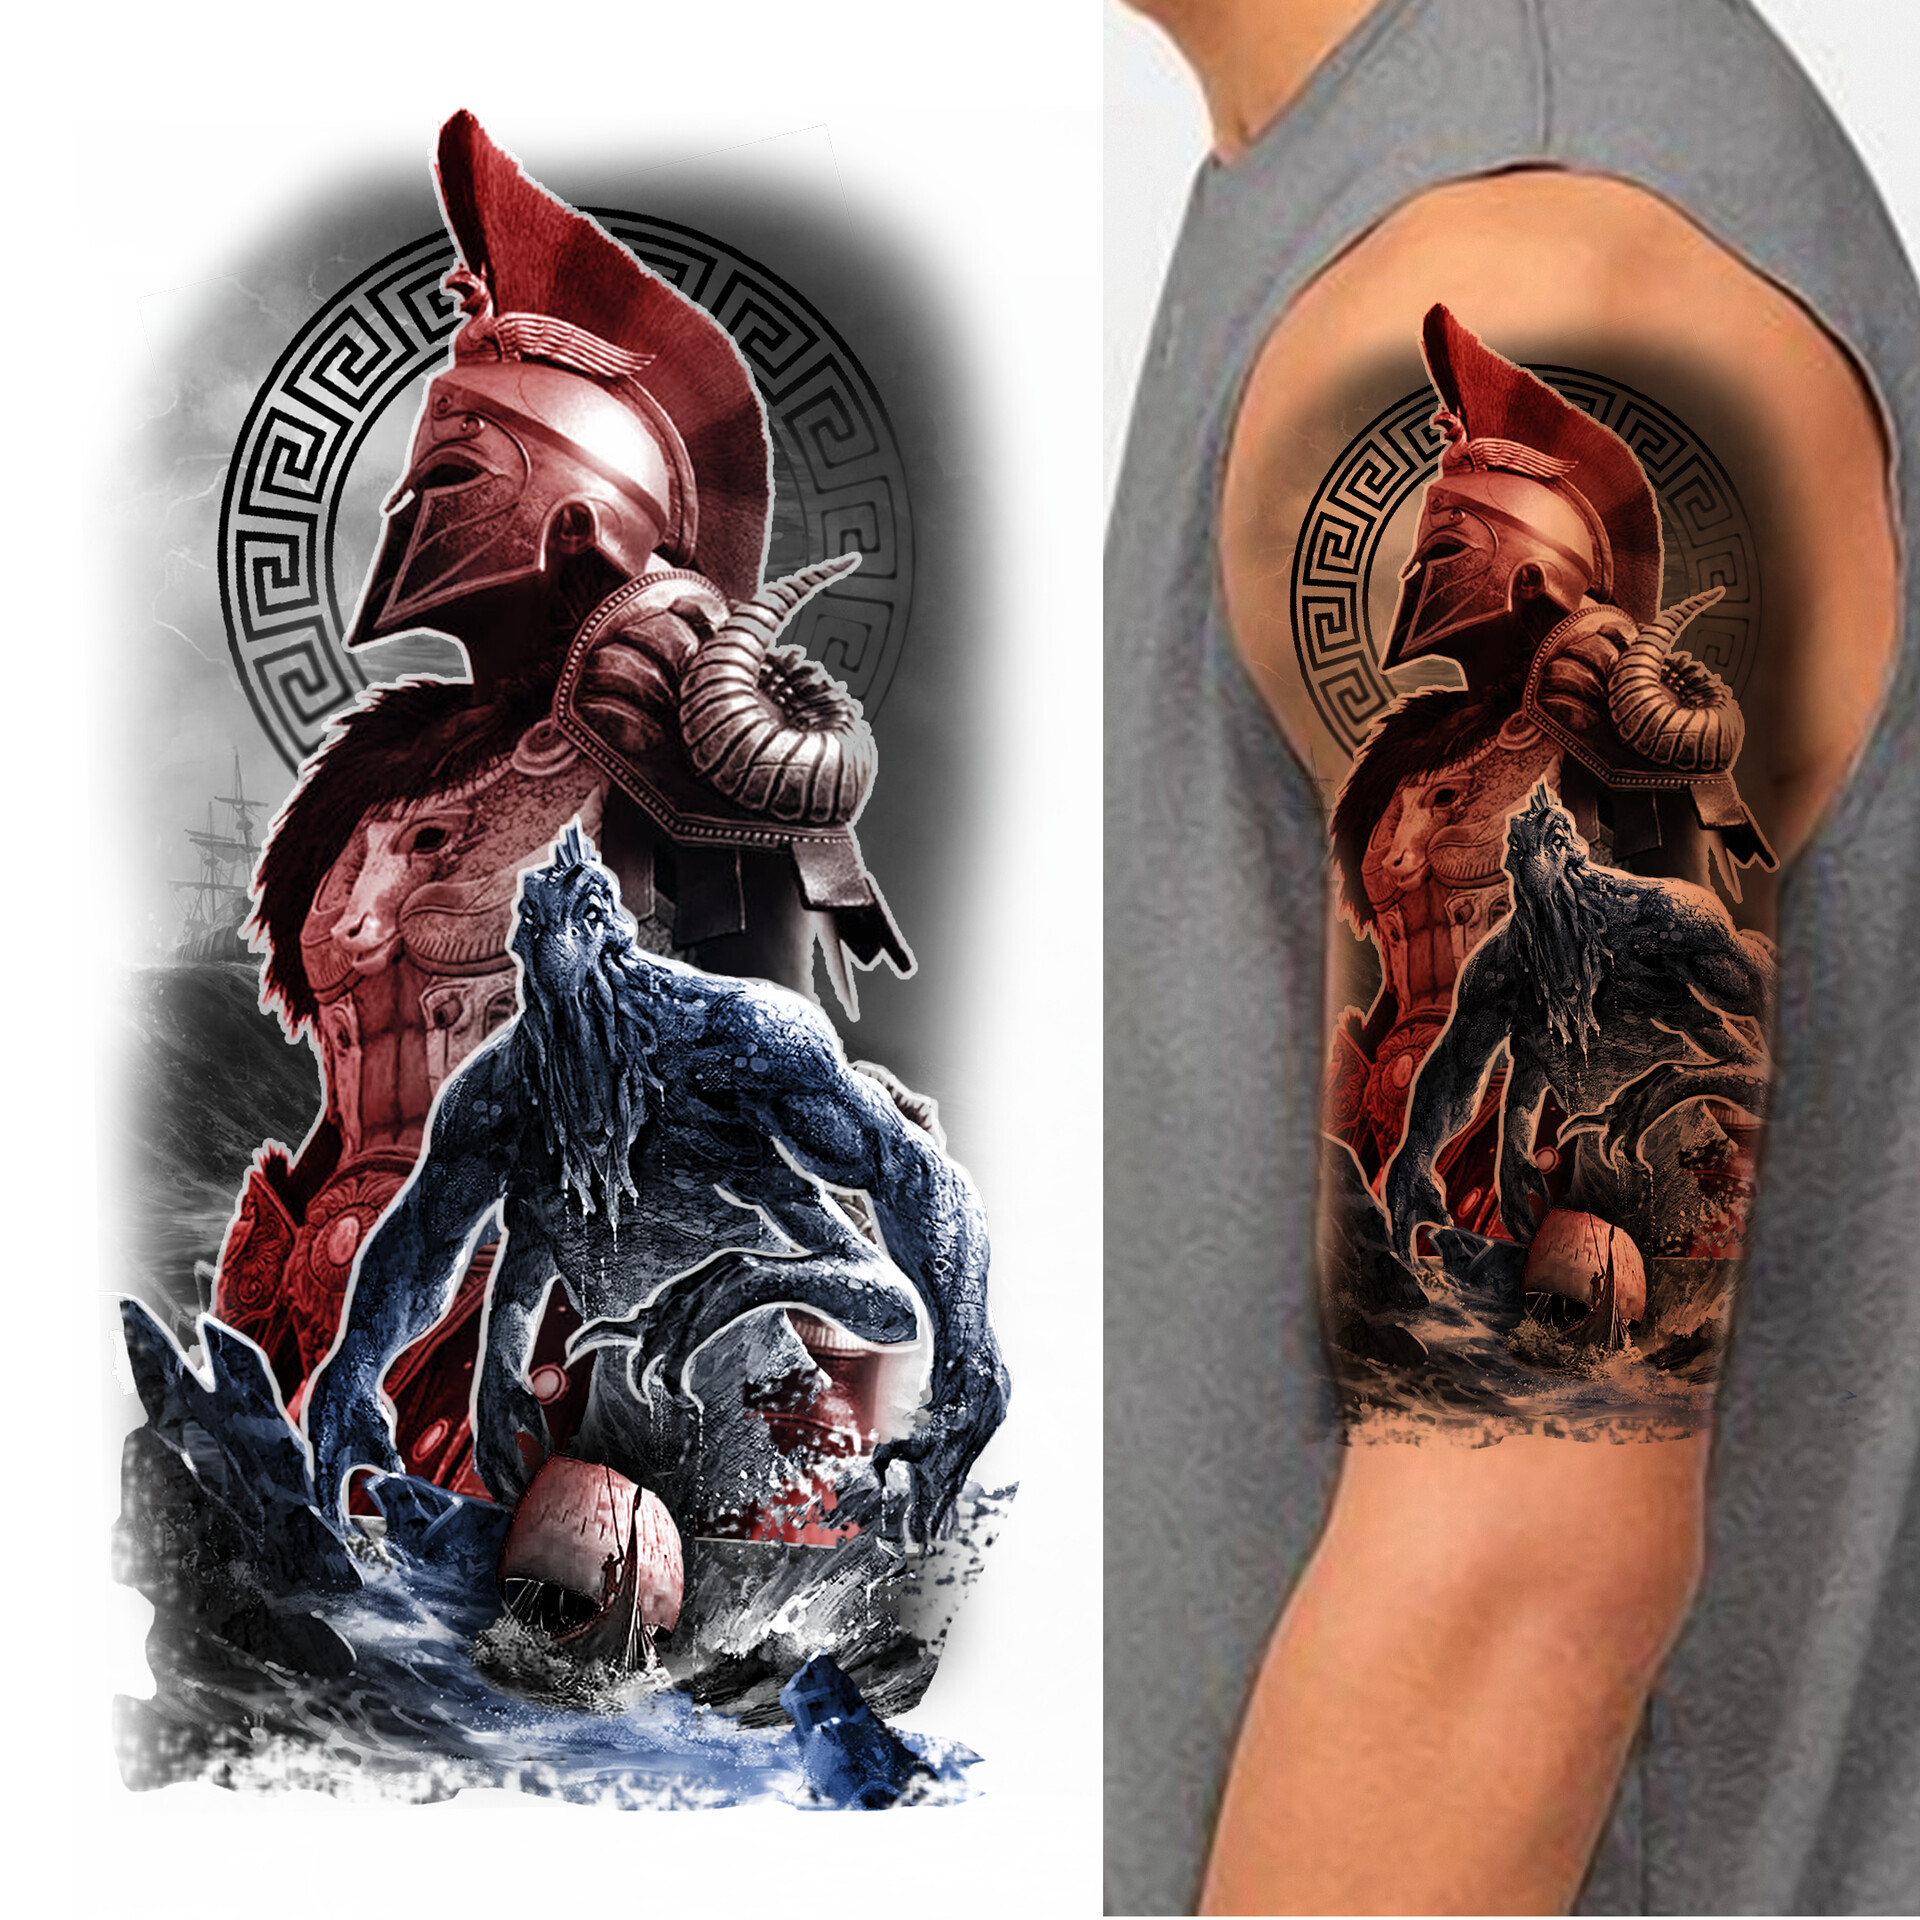 ArtStation - Spartan tattoo